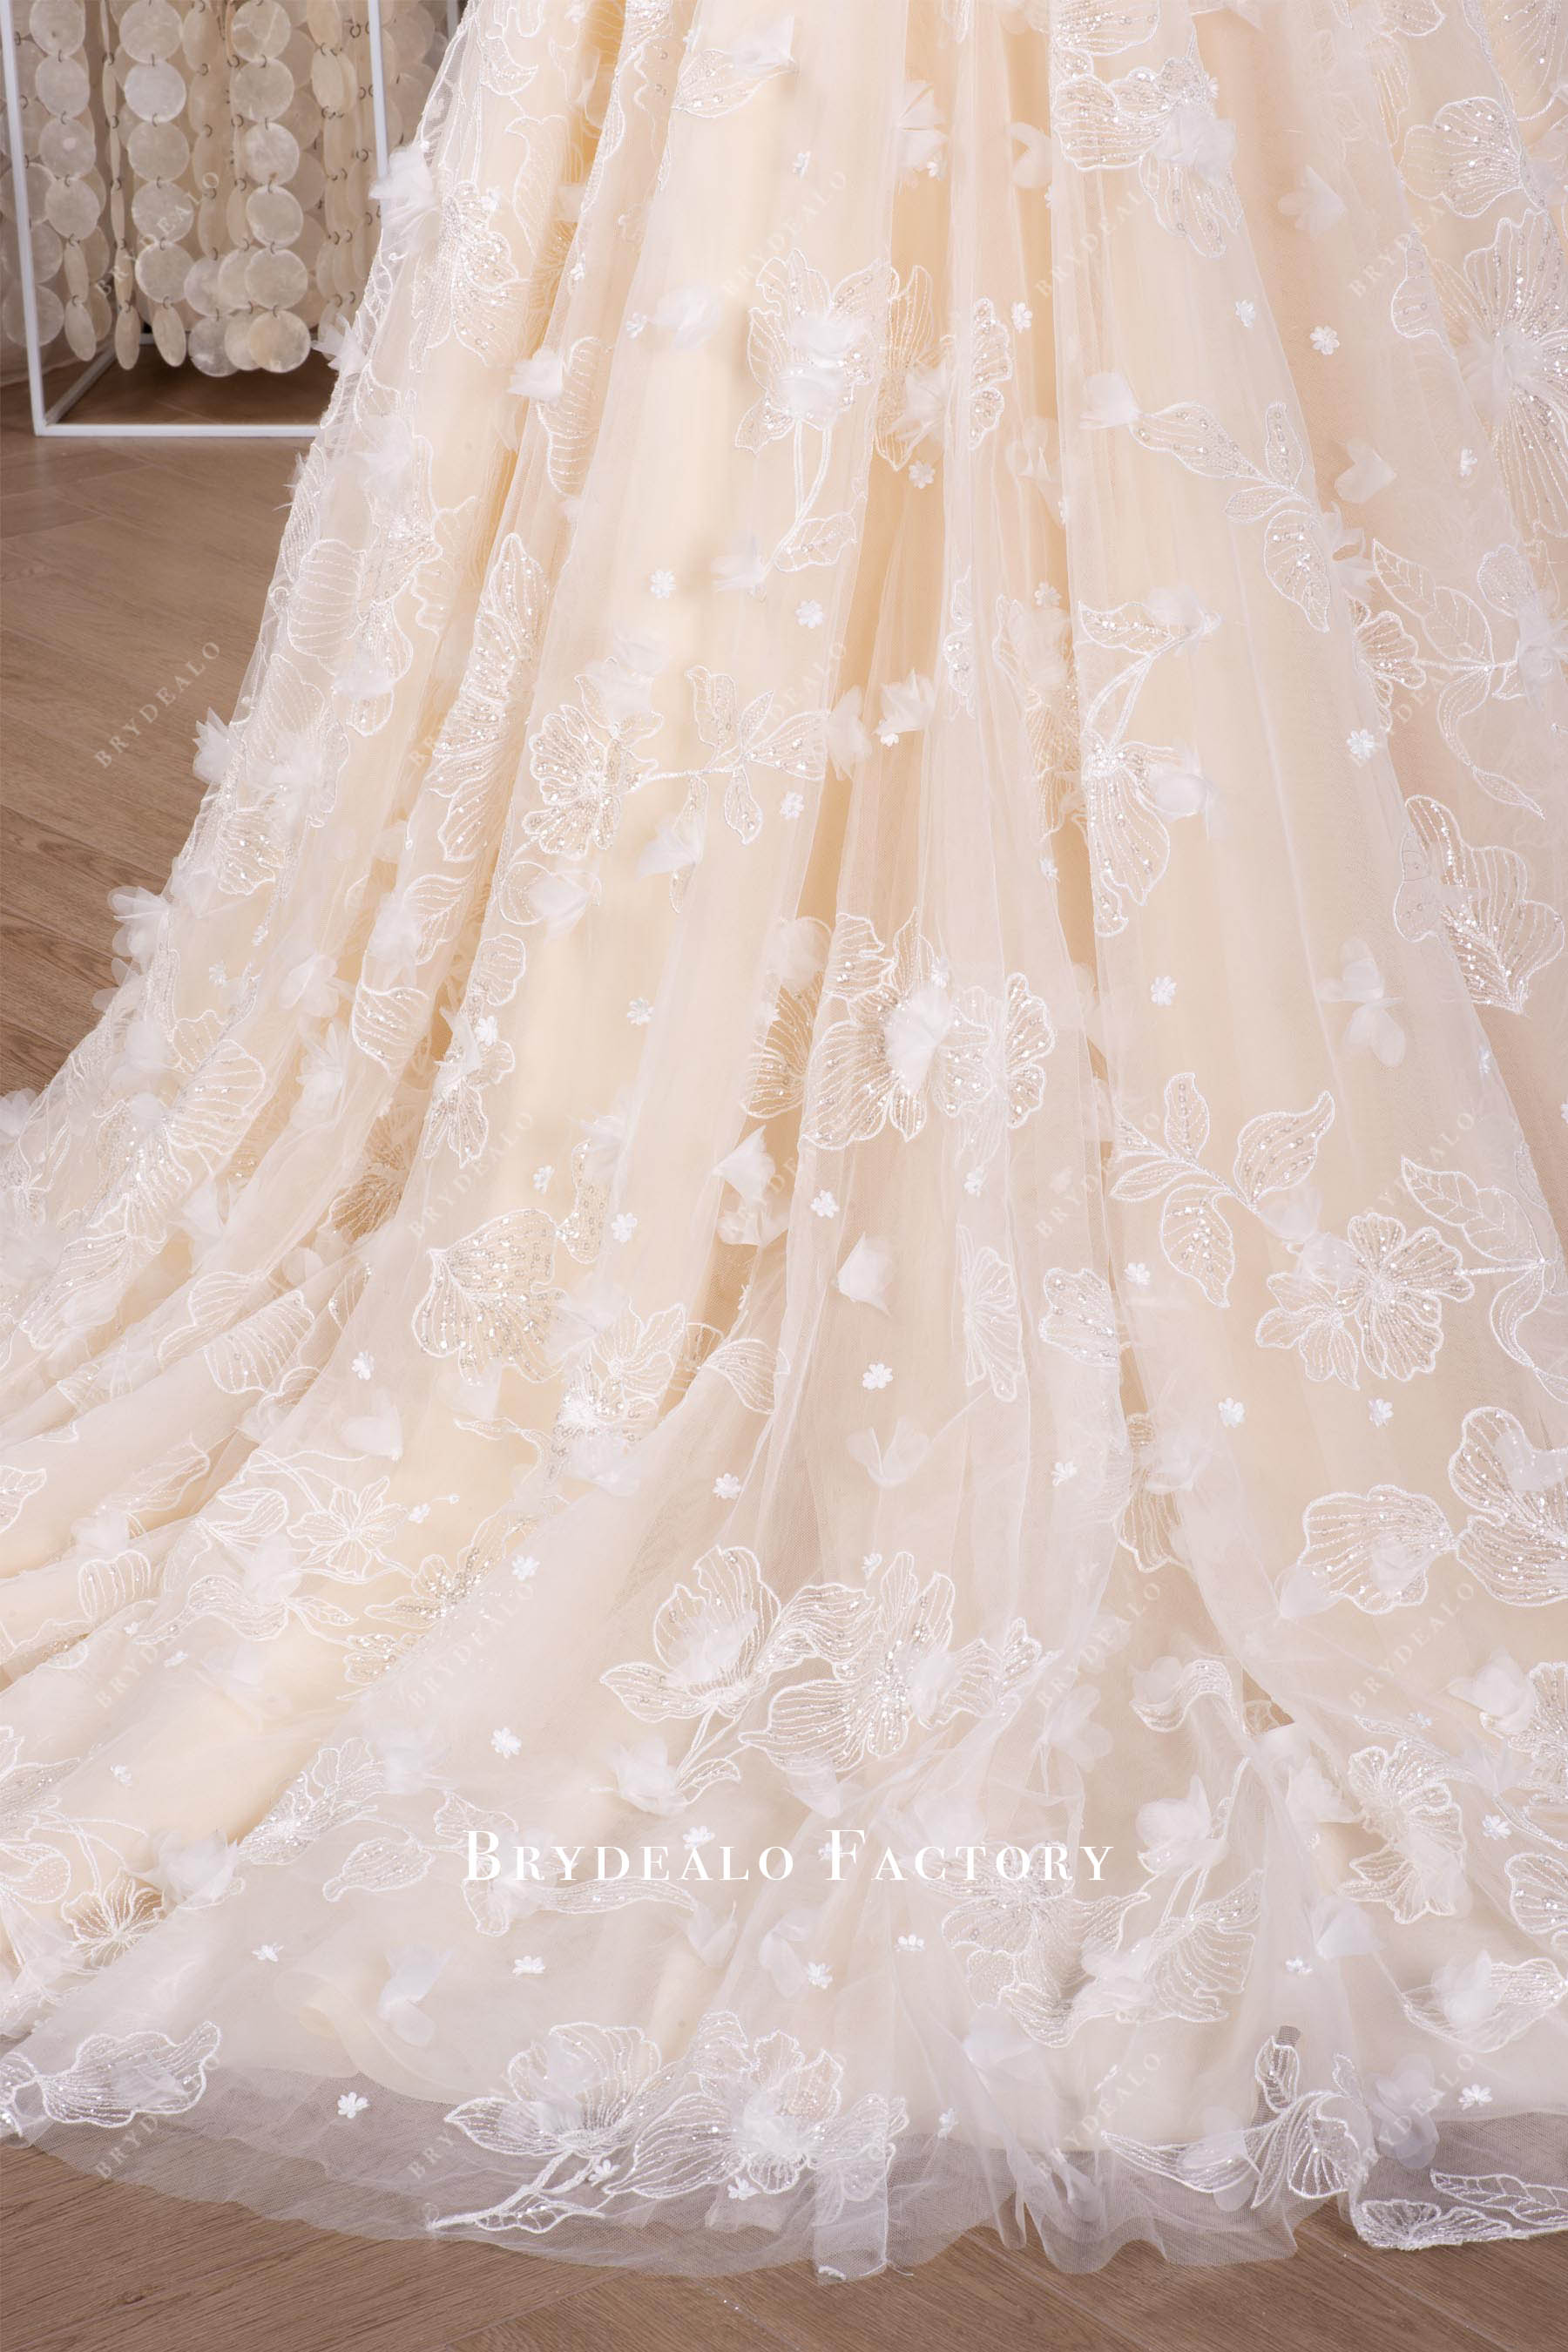 3D flower lace wedding dress